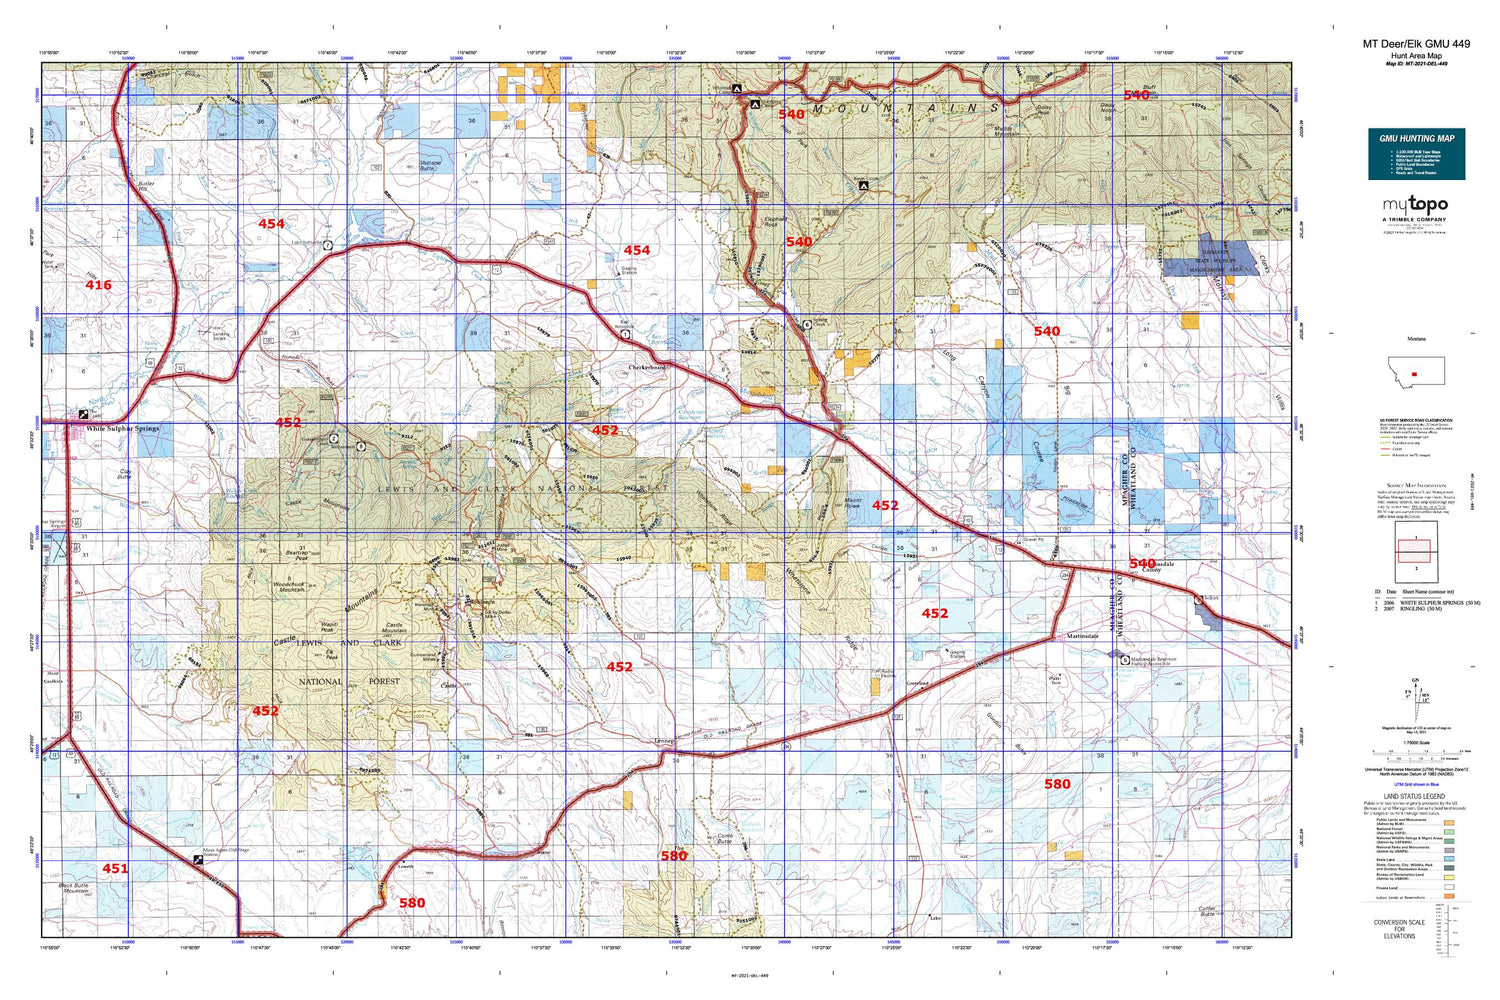 Montana Deer/Elk GMU 449 Map Image